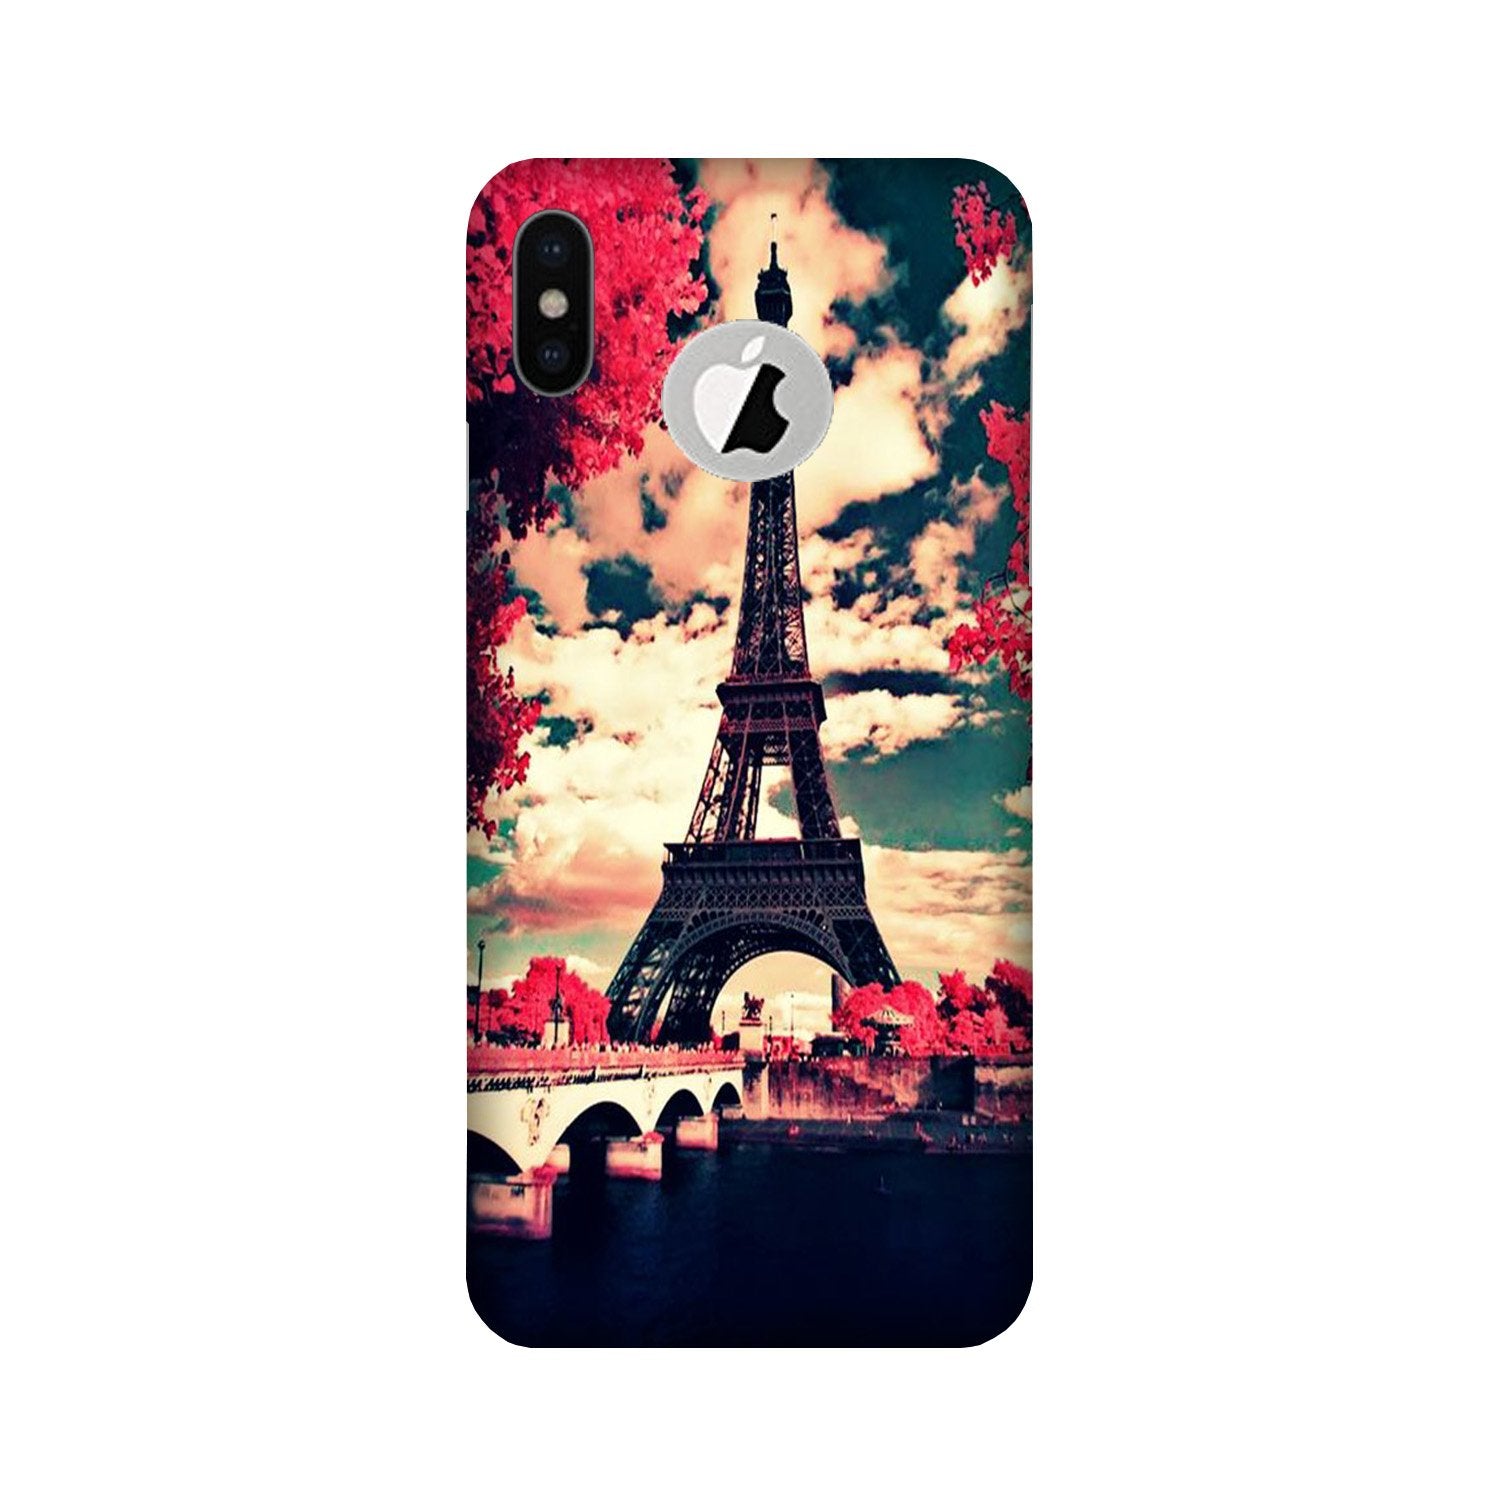 Eiffel Tower Case for iPhone X logo cut (Design No. 212)